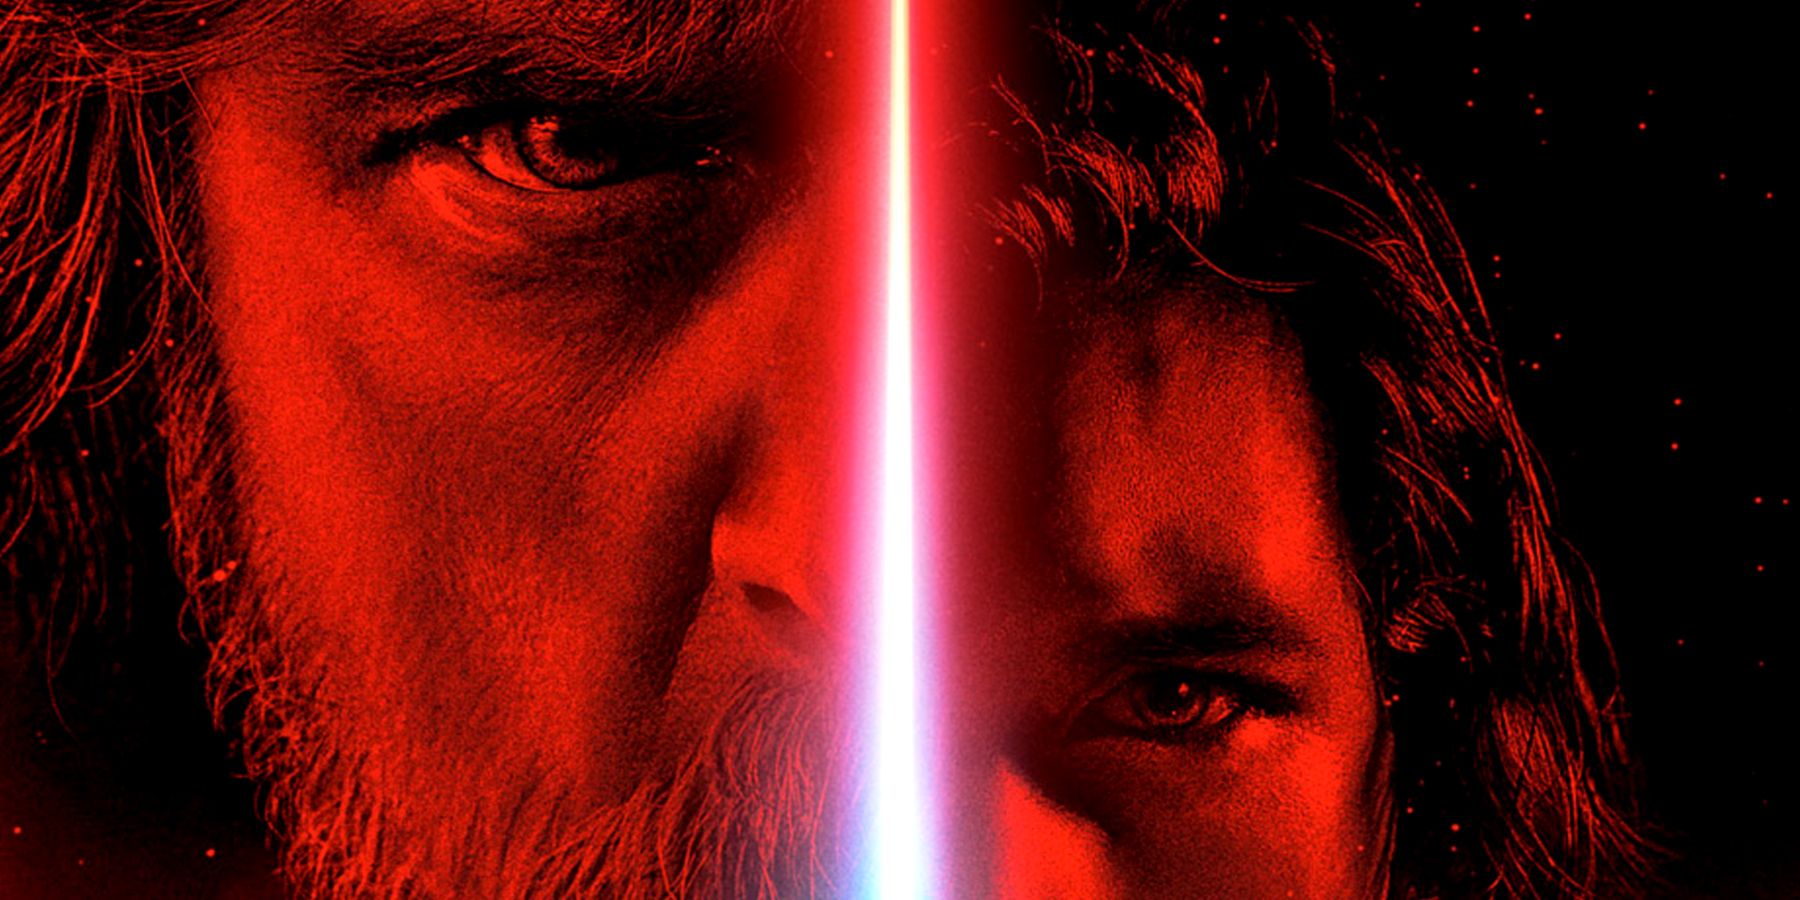 Last Jedi Rotten Tomatoes Audience Score Is Fake News